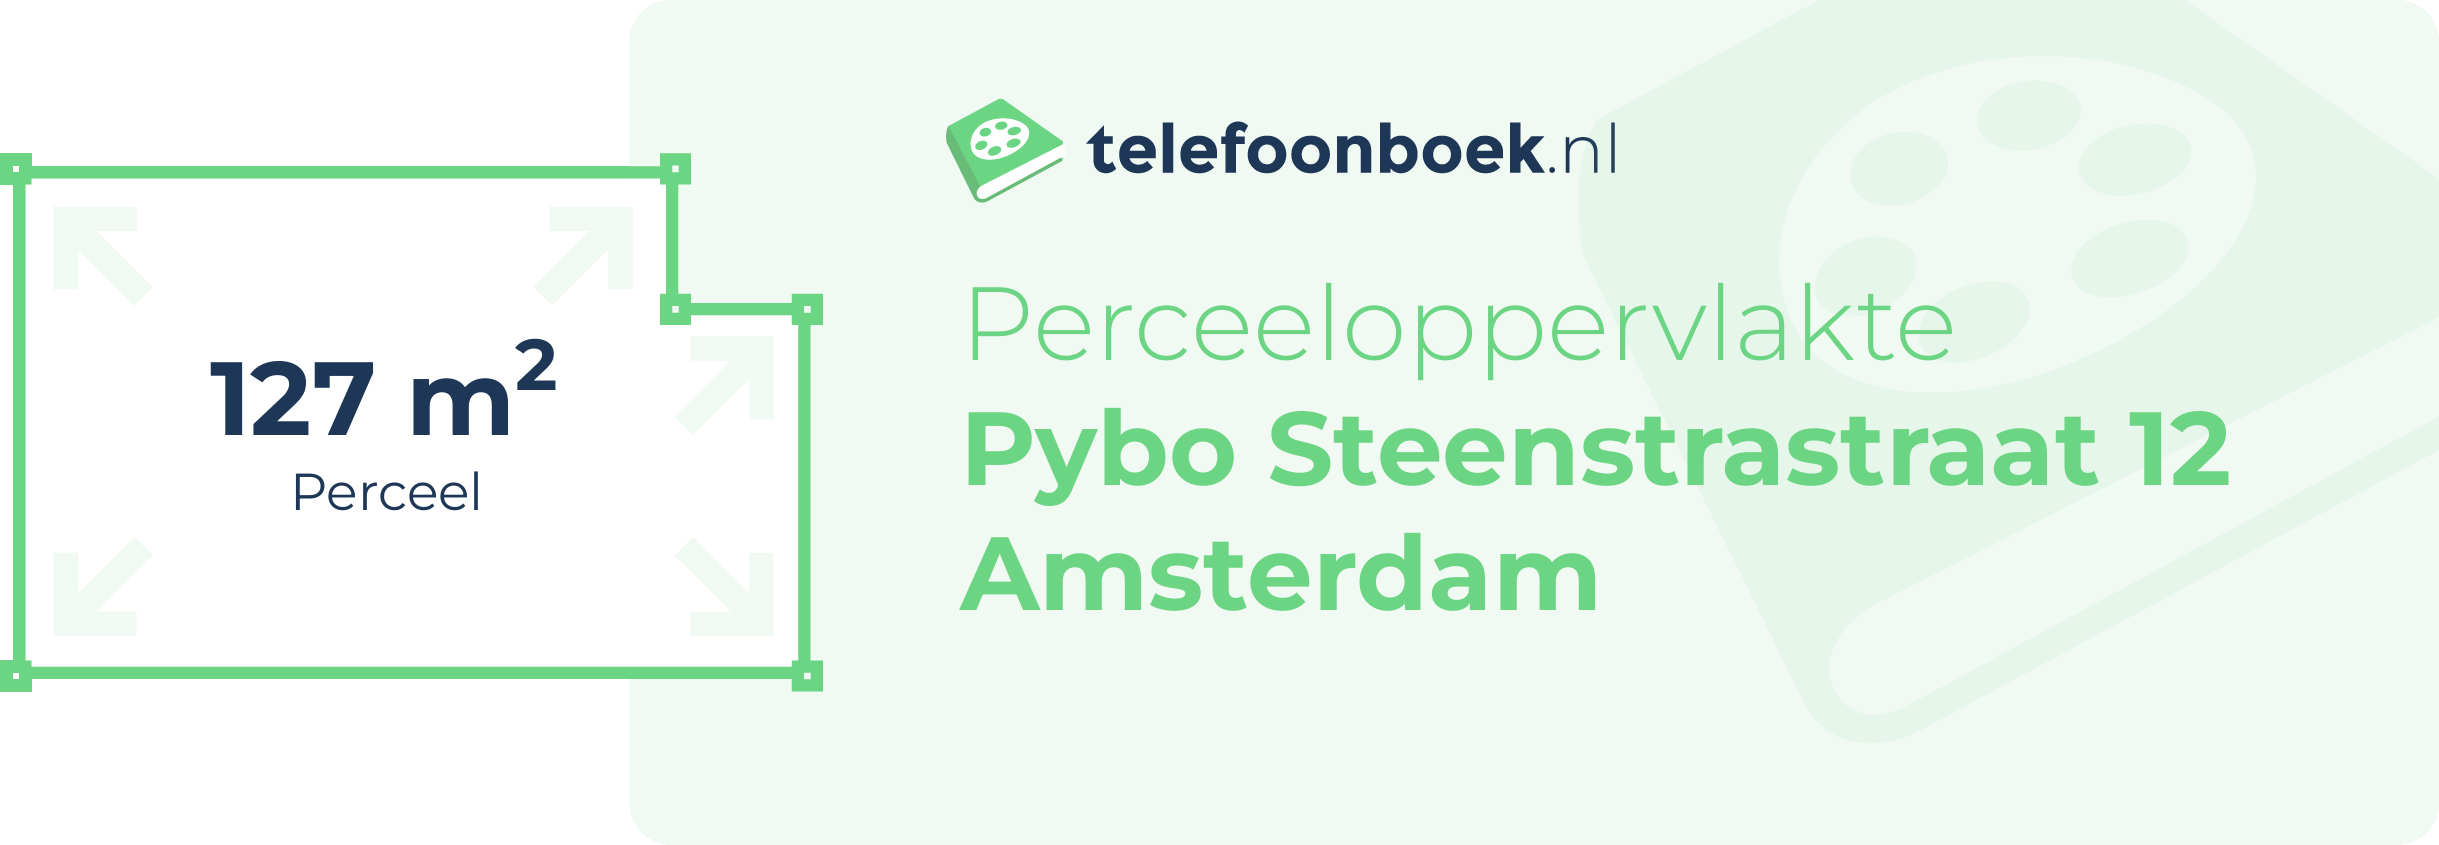 Perceeloppervlakte Pybo Steenstrastraat 12 Amsterdam